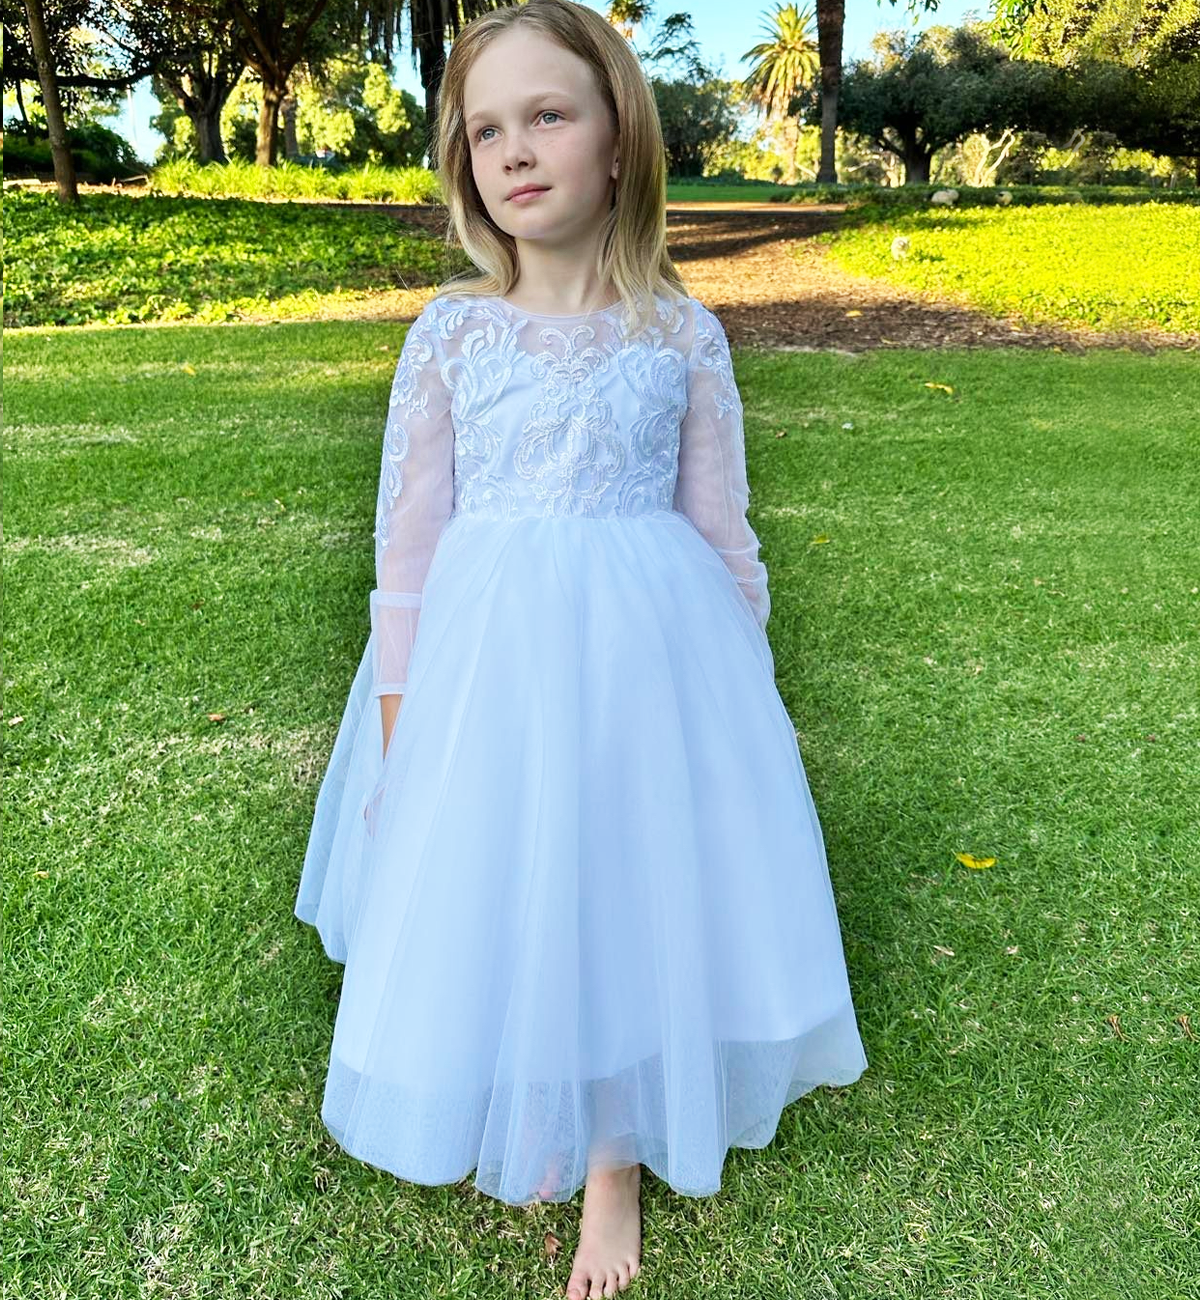 Violet in Ivory - Flower Girl or Communion Dress